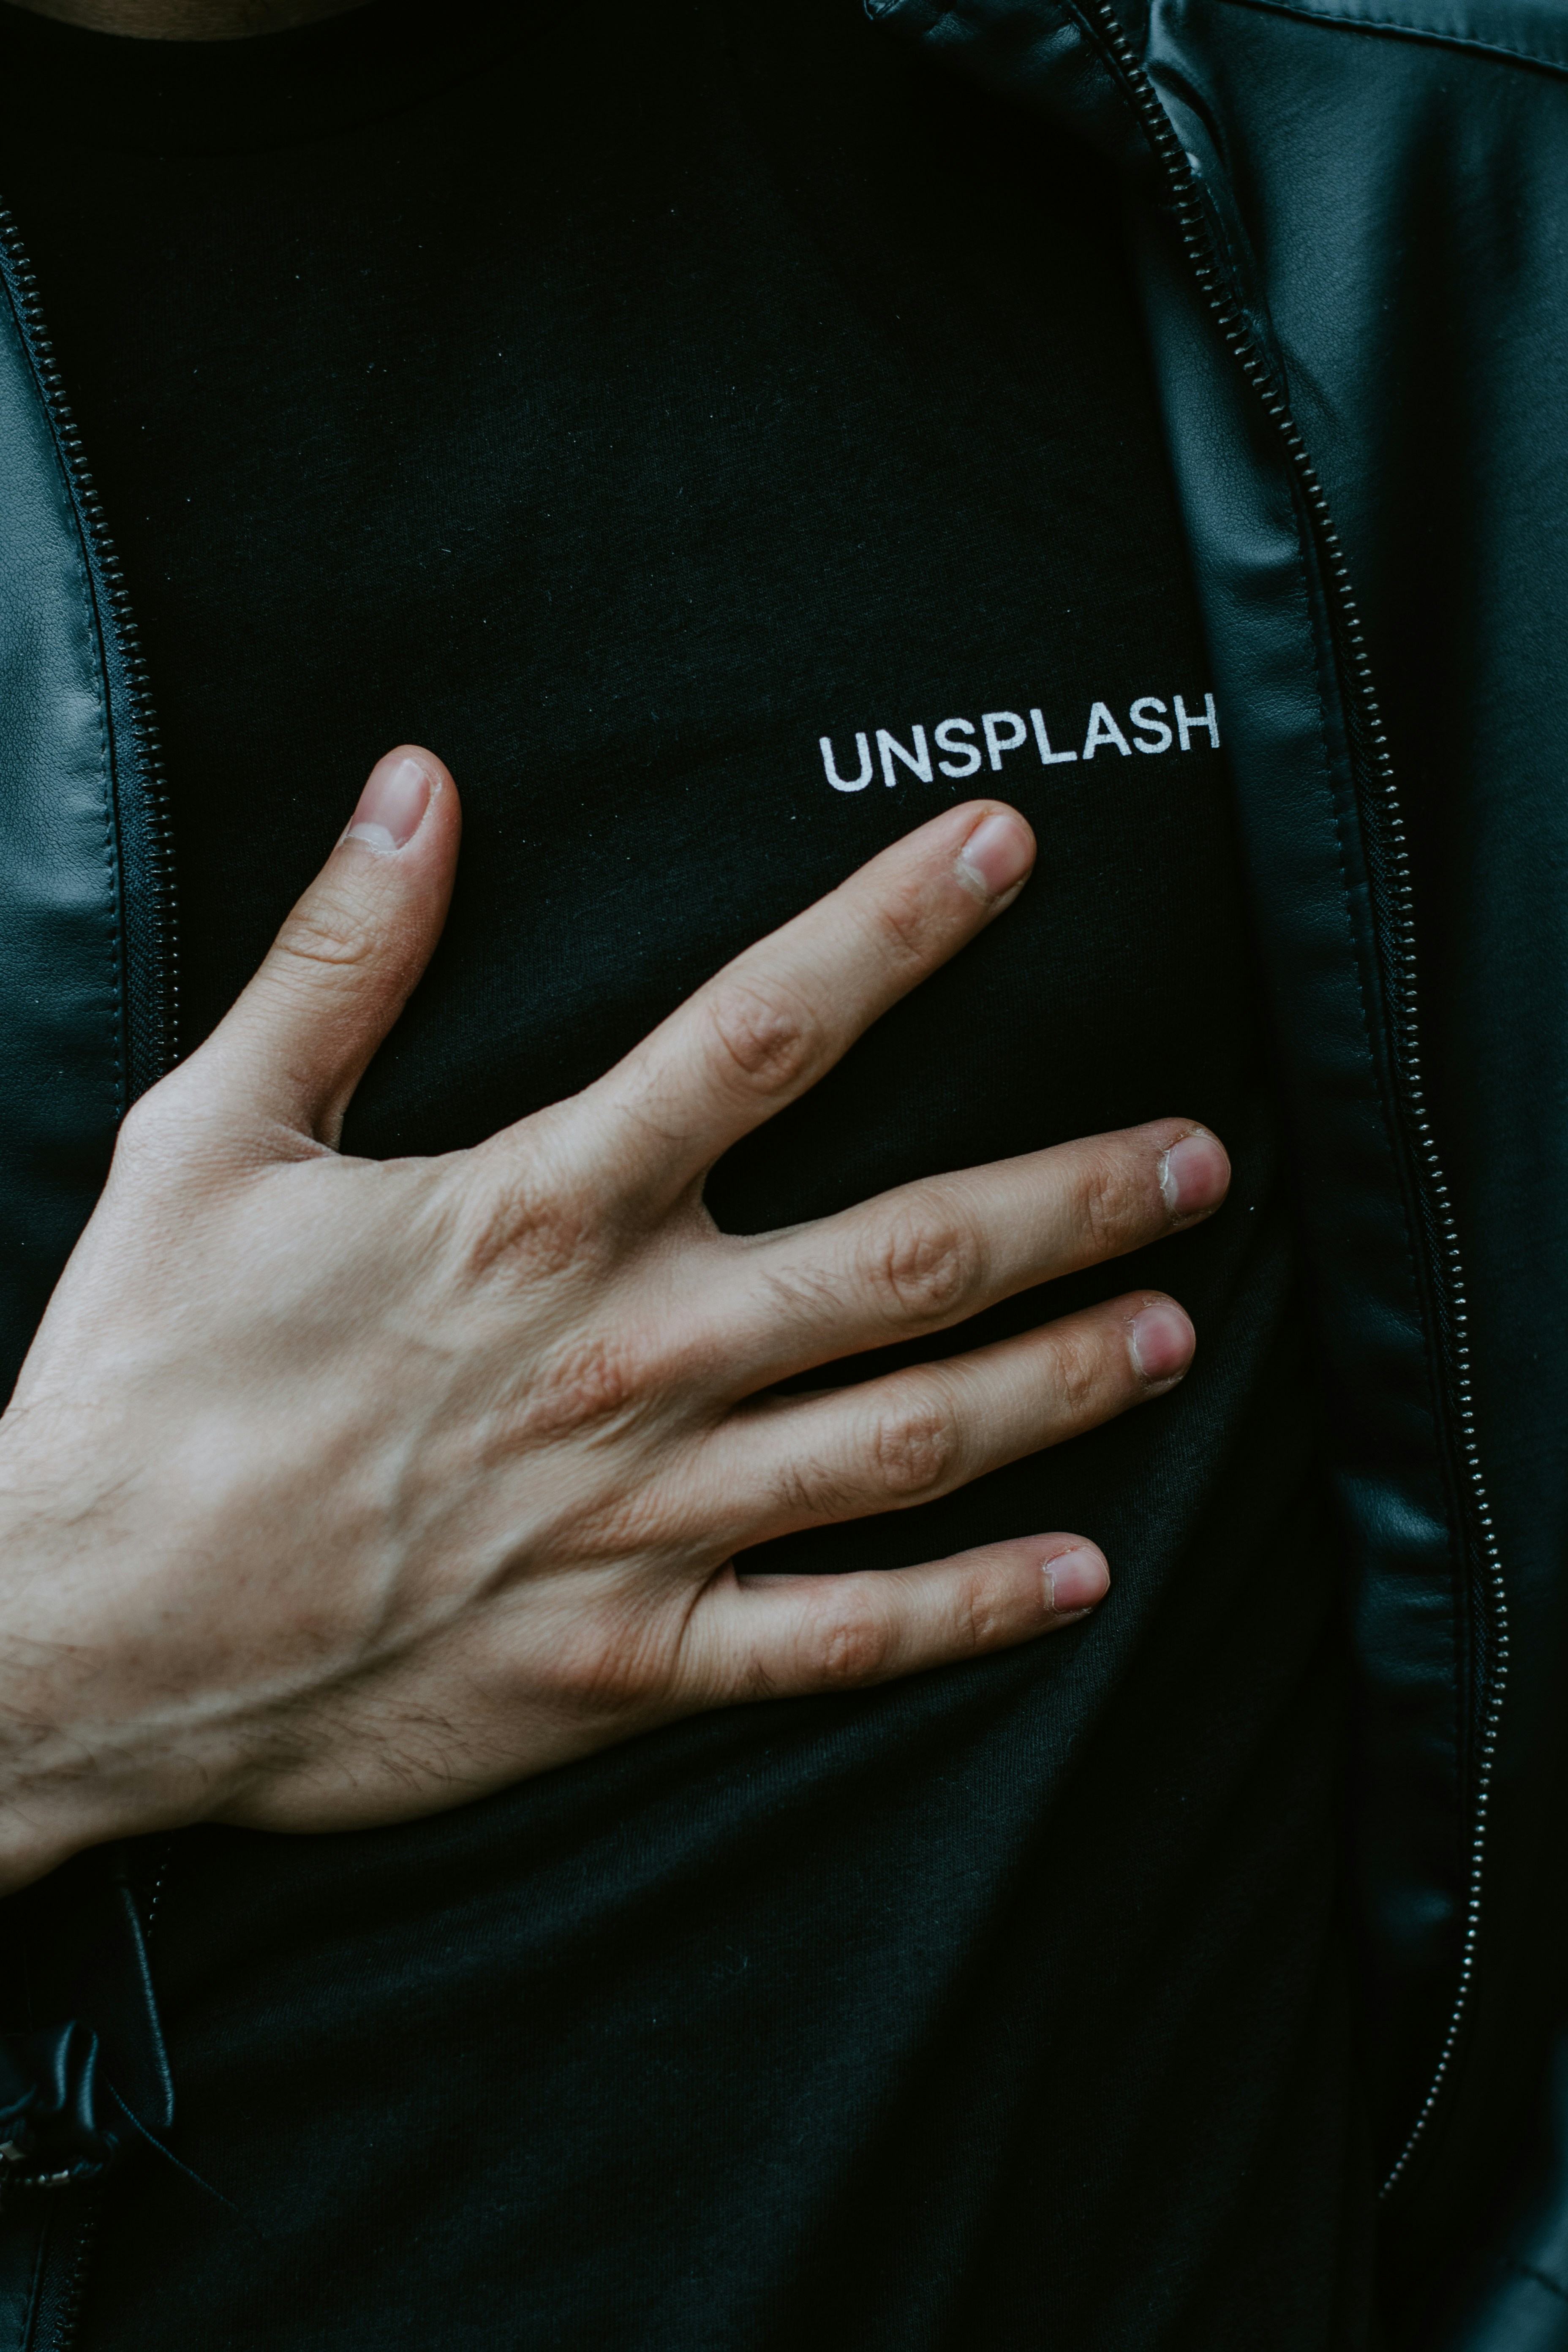 Feeling Unsplash's special t-shirt